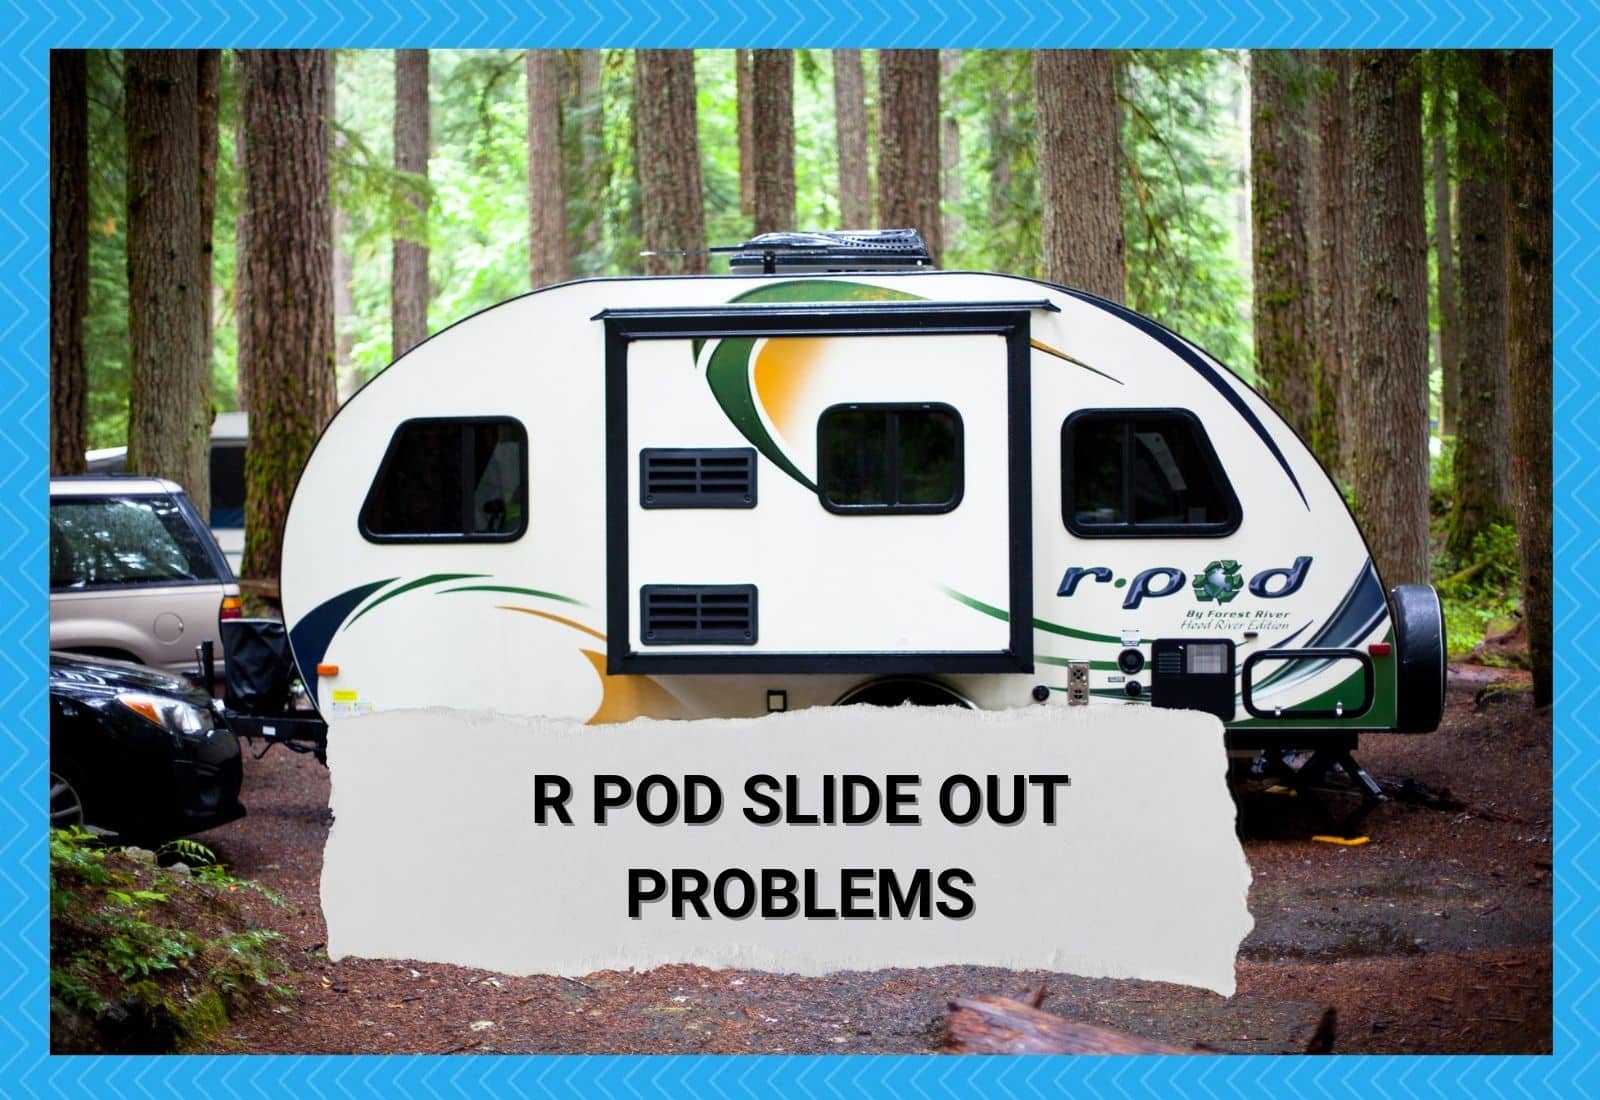 R Pod Slide Out Problems